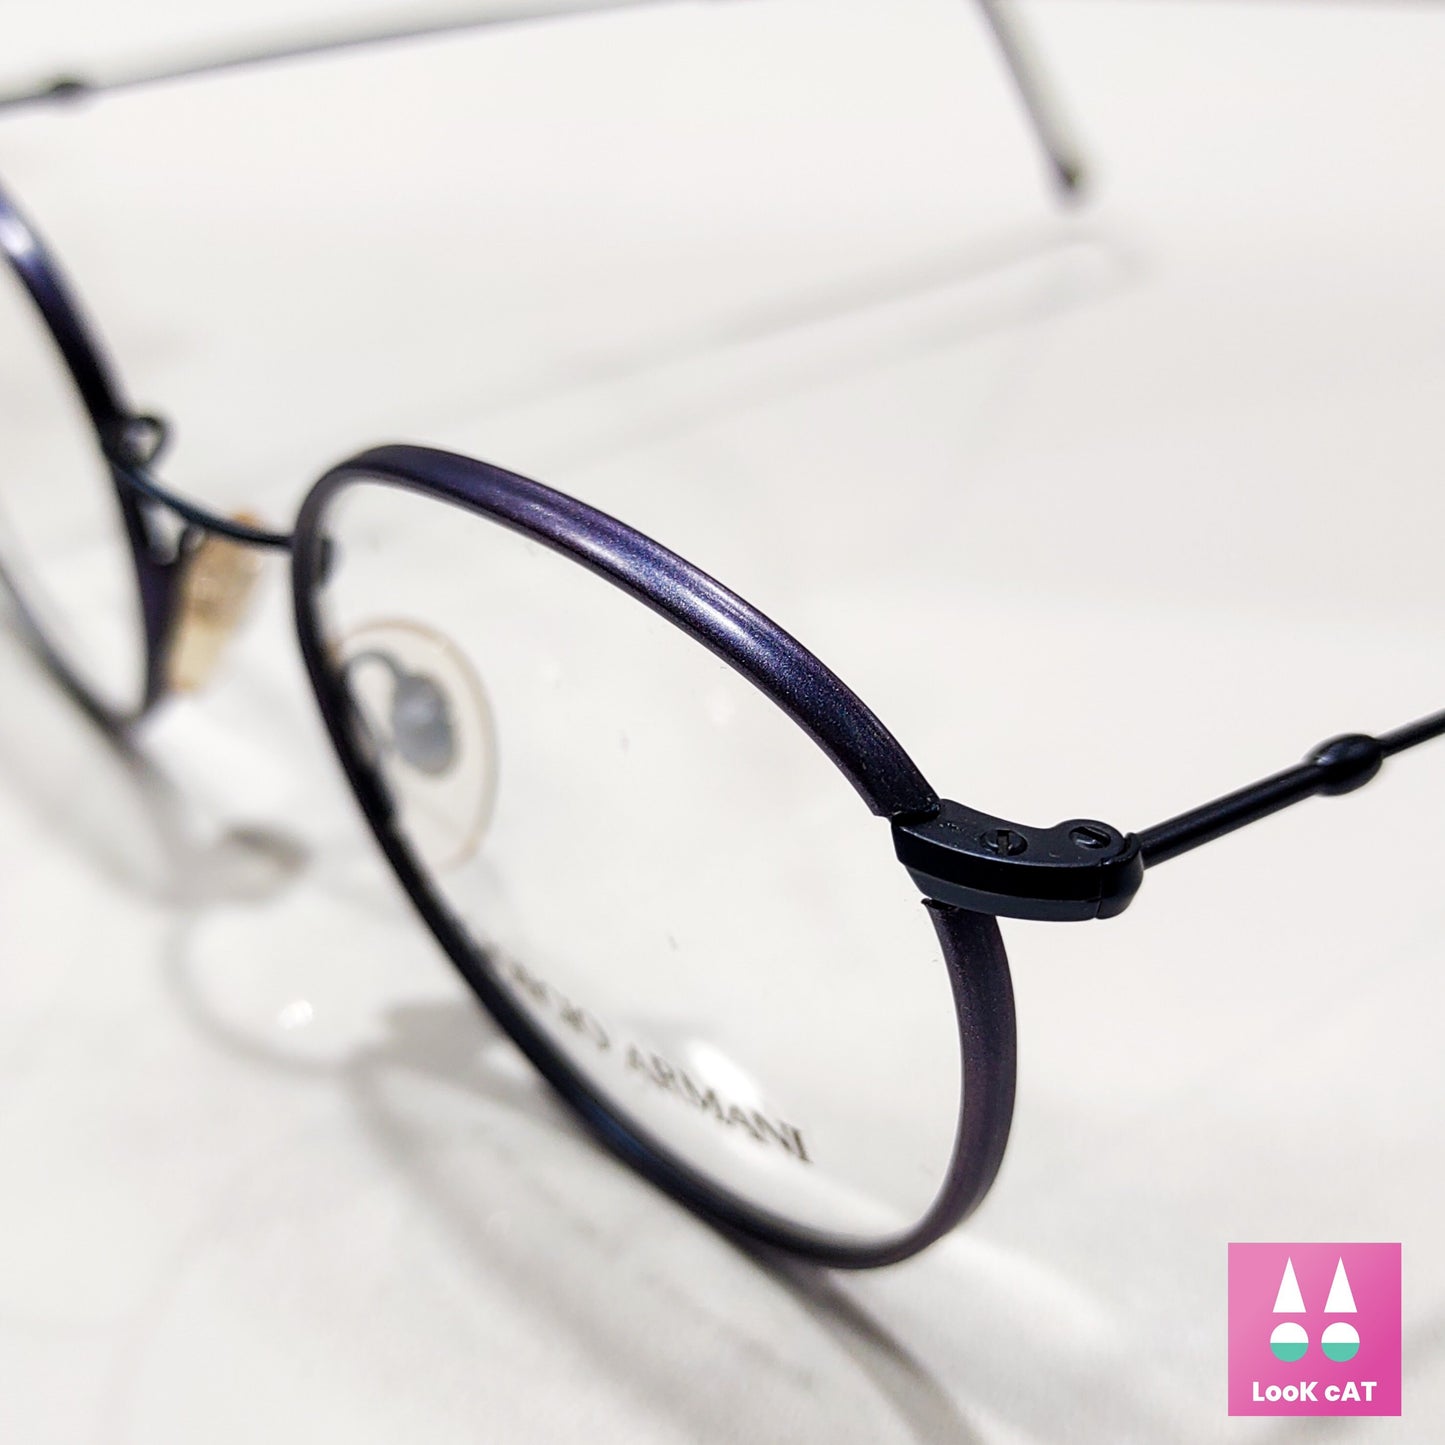 Giorgio Armani 253 eyeframe occhiali da vista lunetta tonalità brille pantos occhiali vintage anni '90 made in Italy